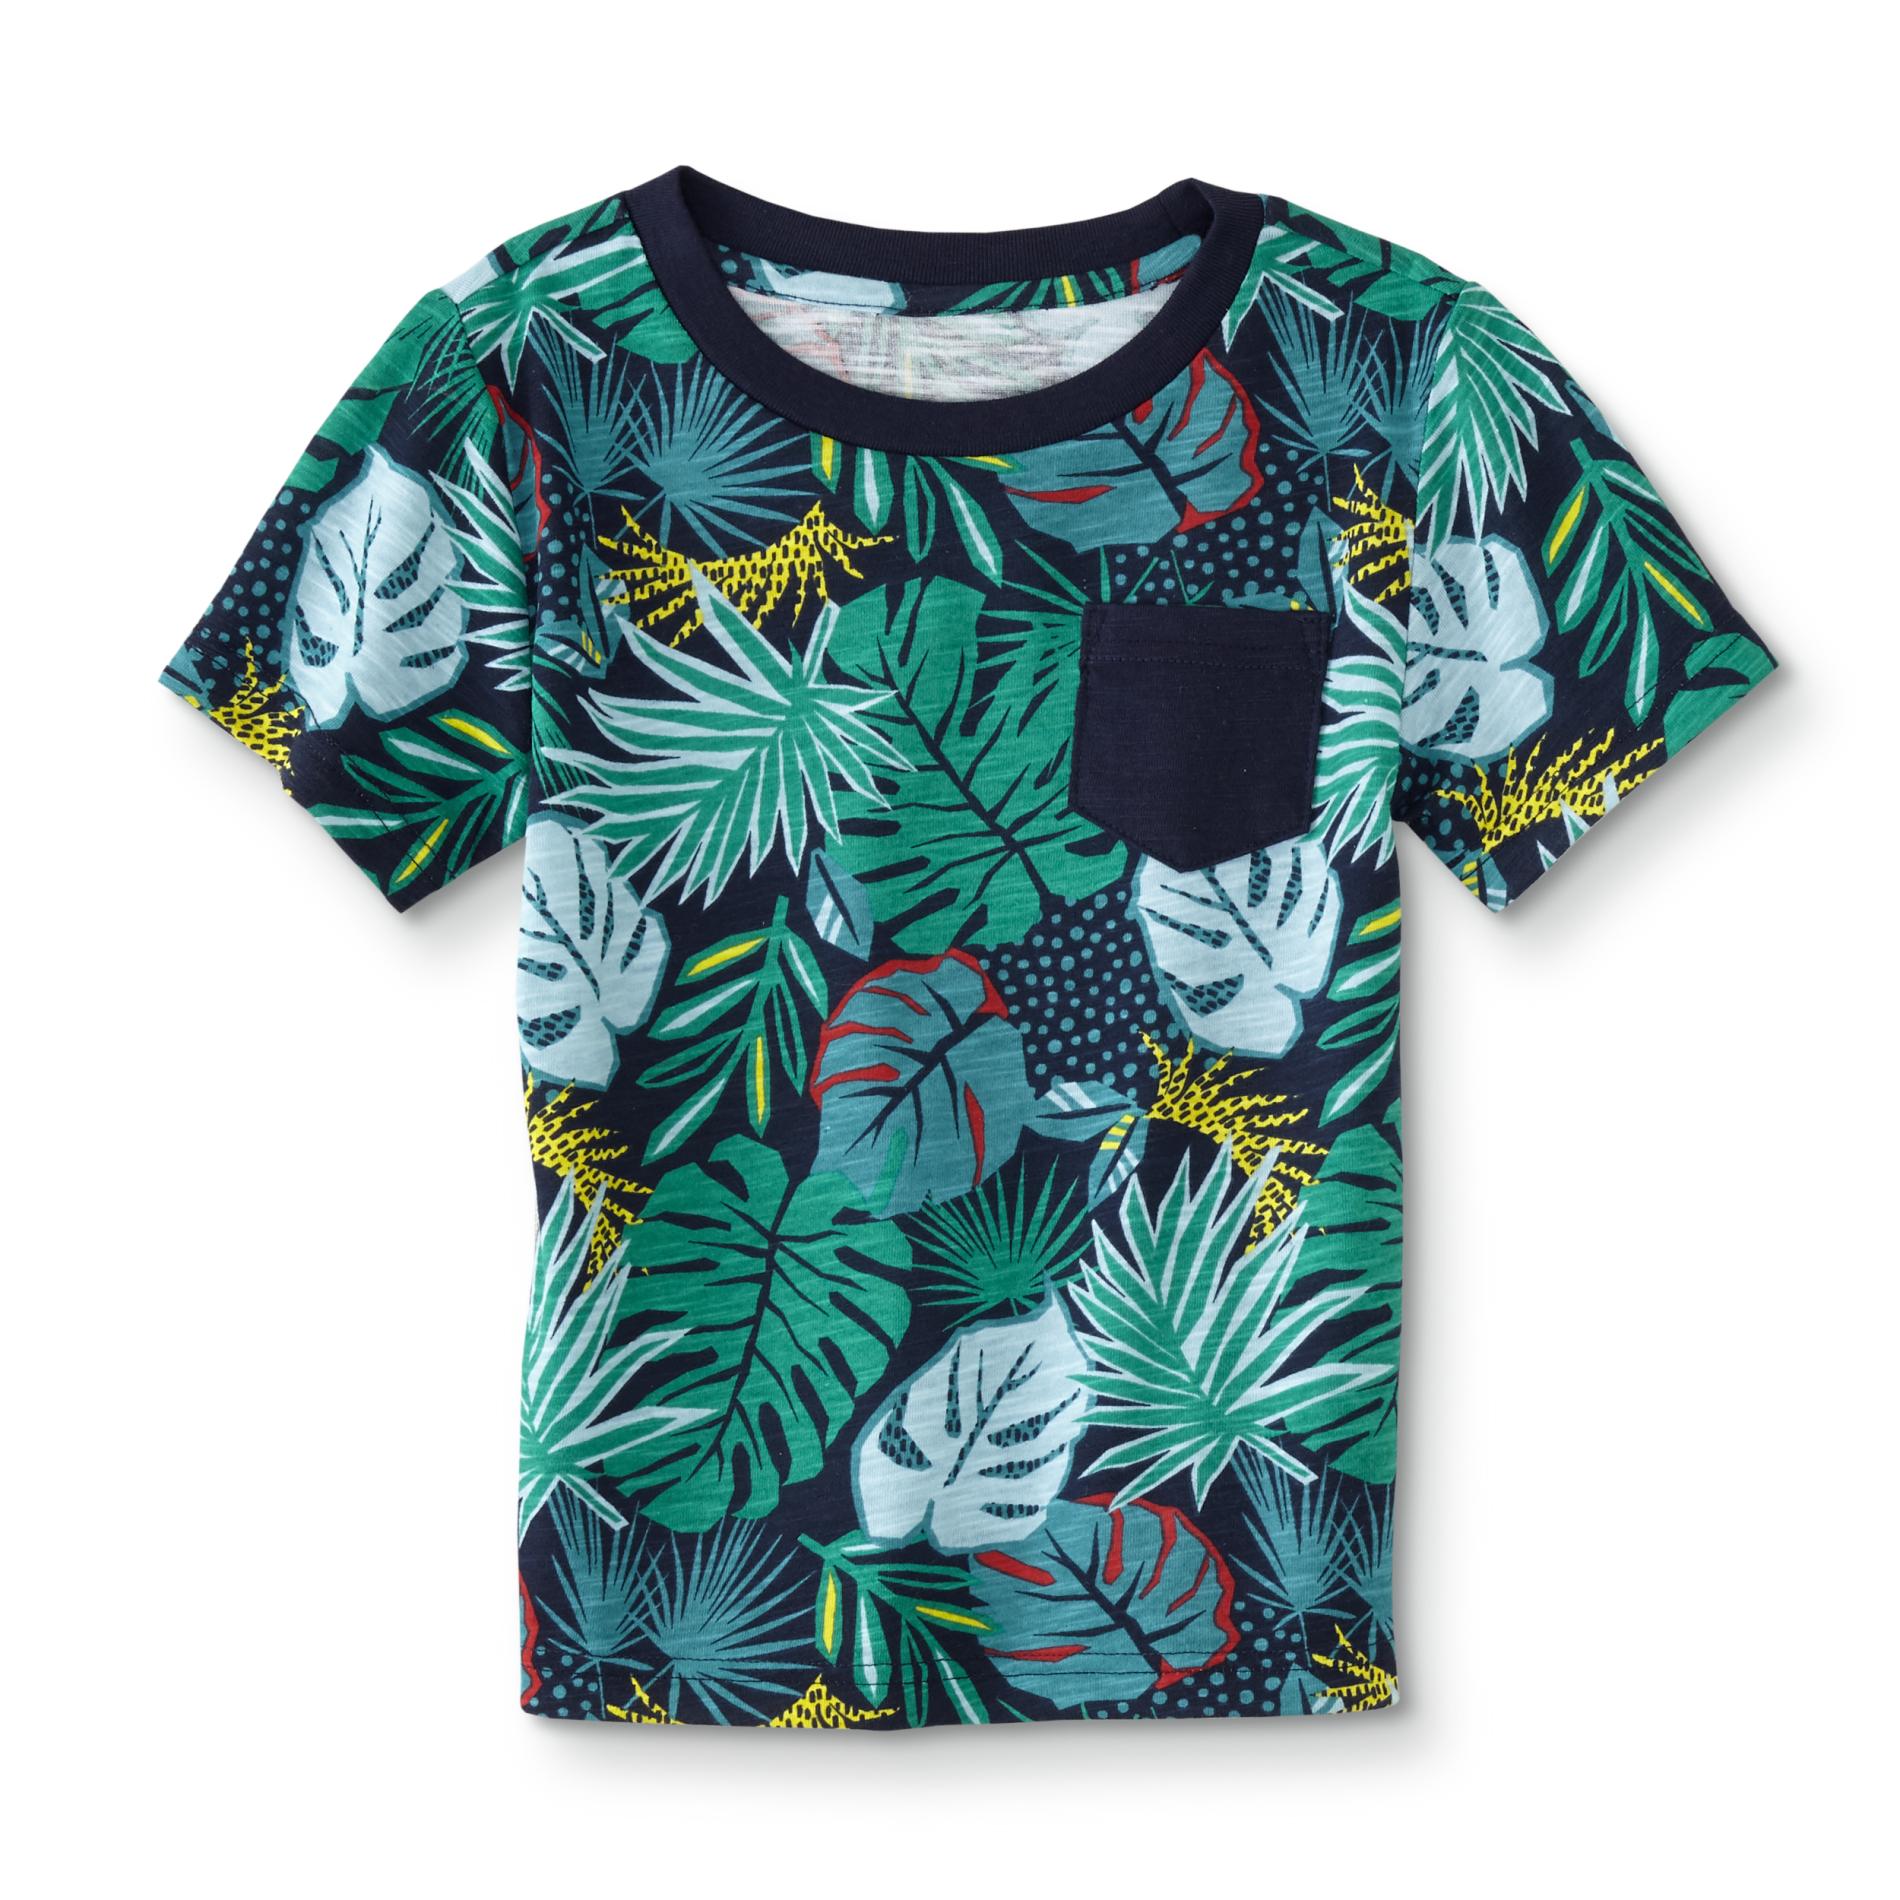 Toughskins Infant & Toddler Boys' Pocket T-Shirt - Palm Leaves